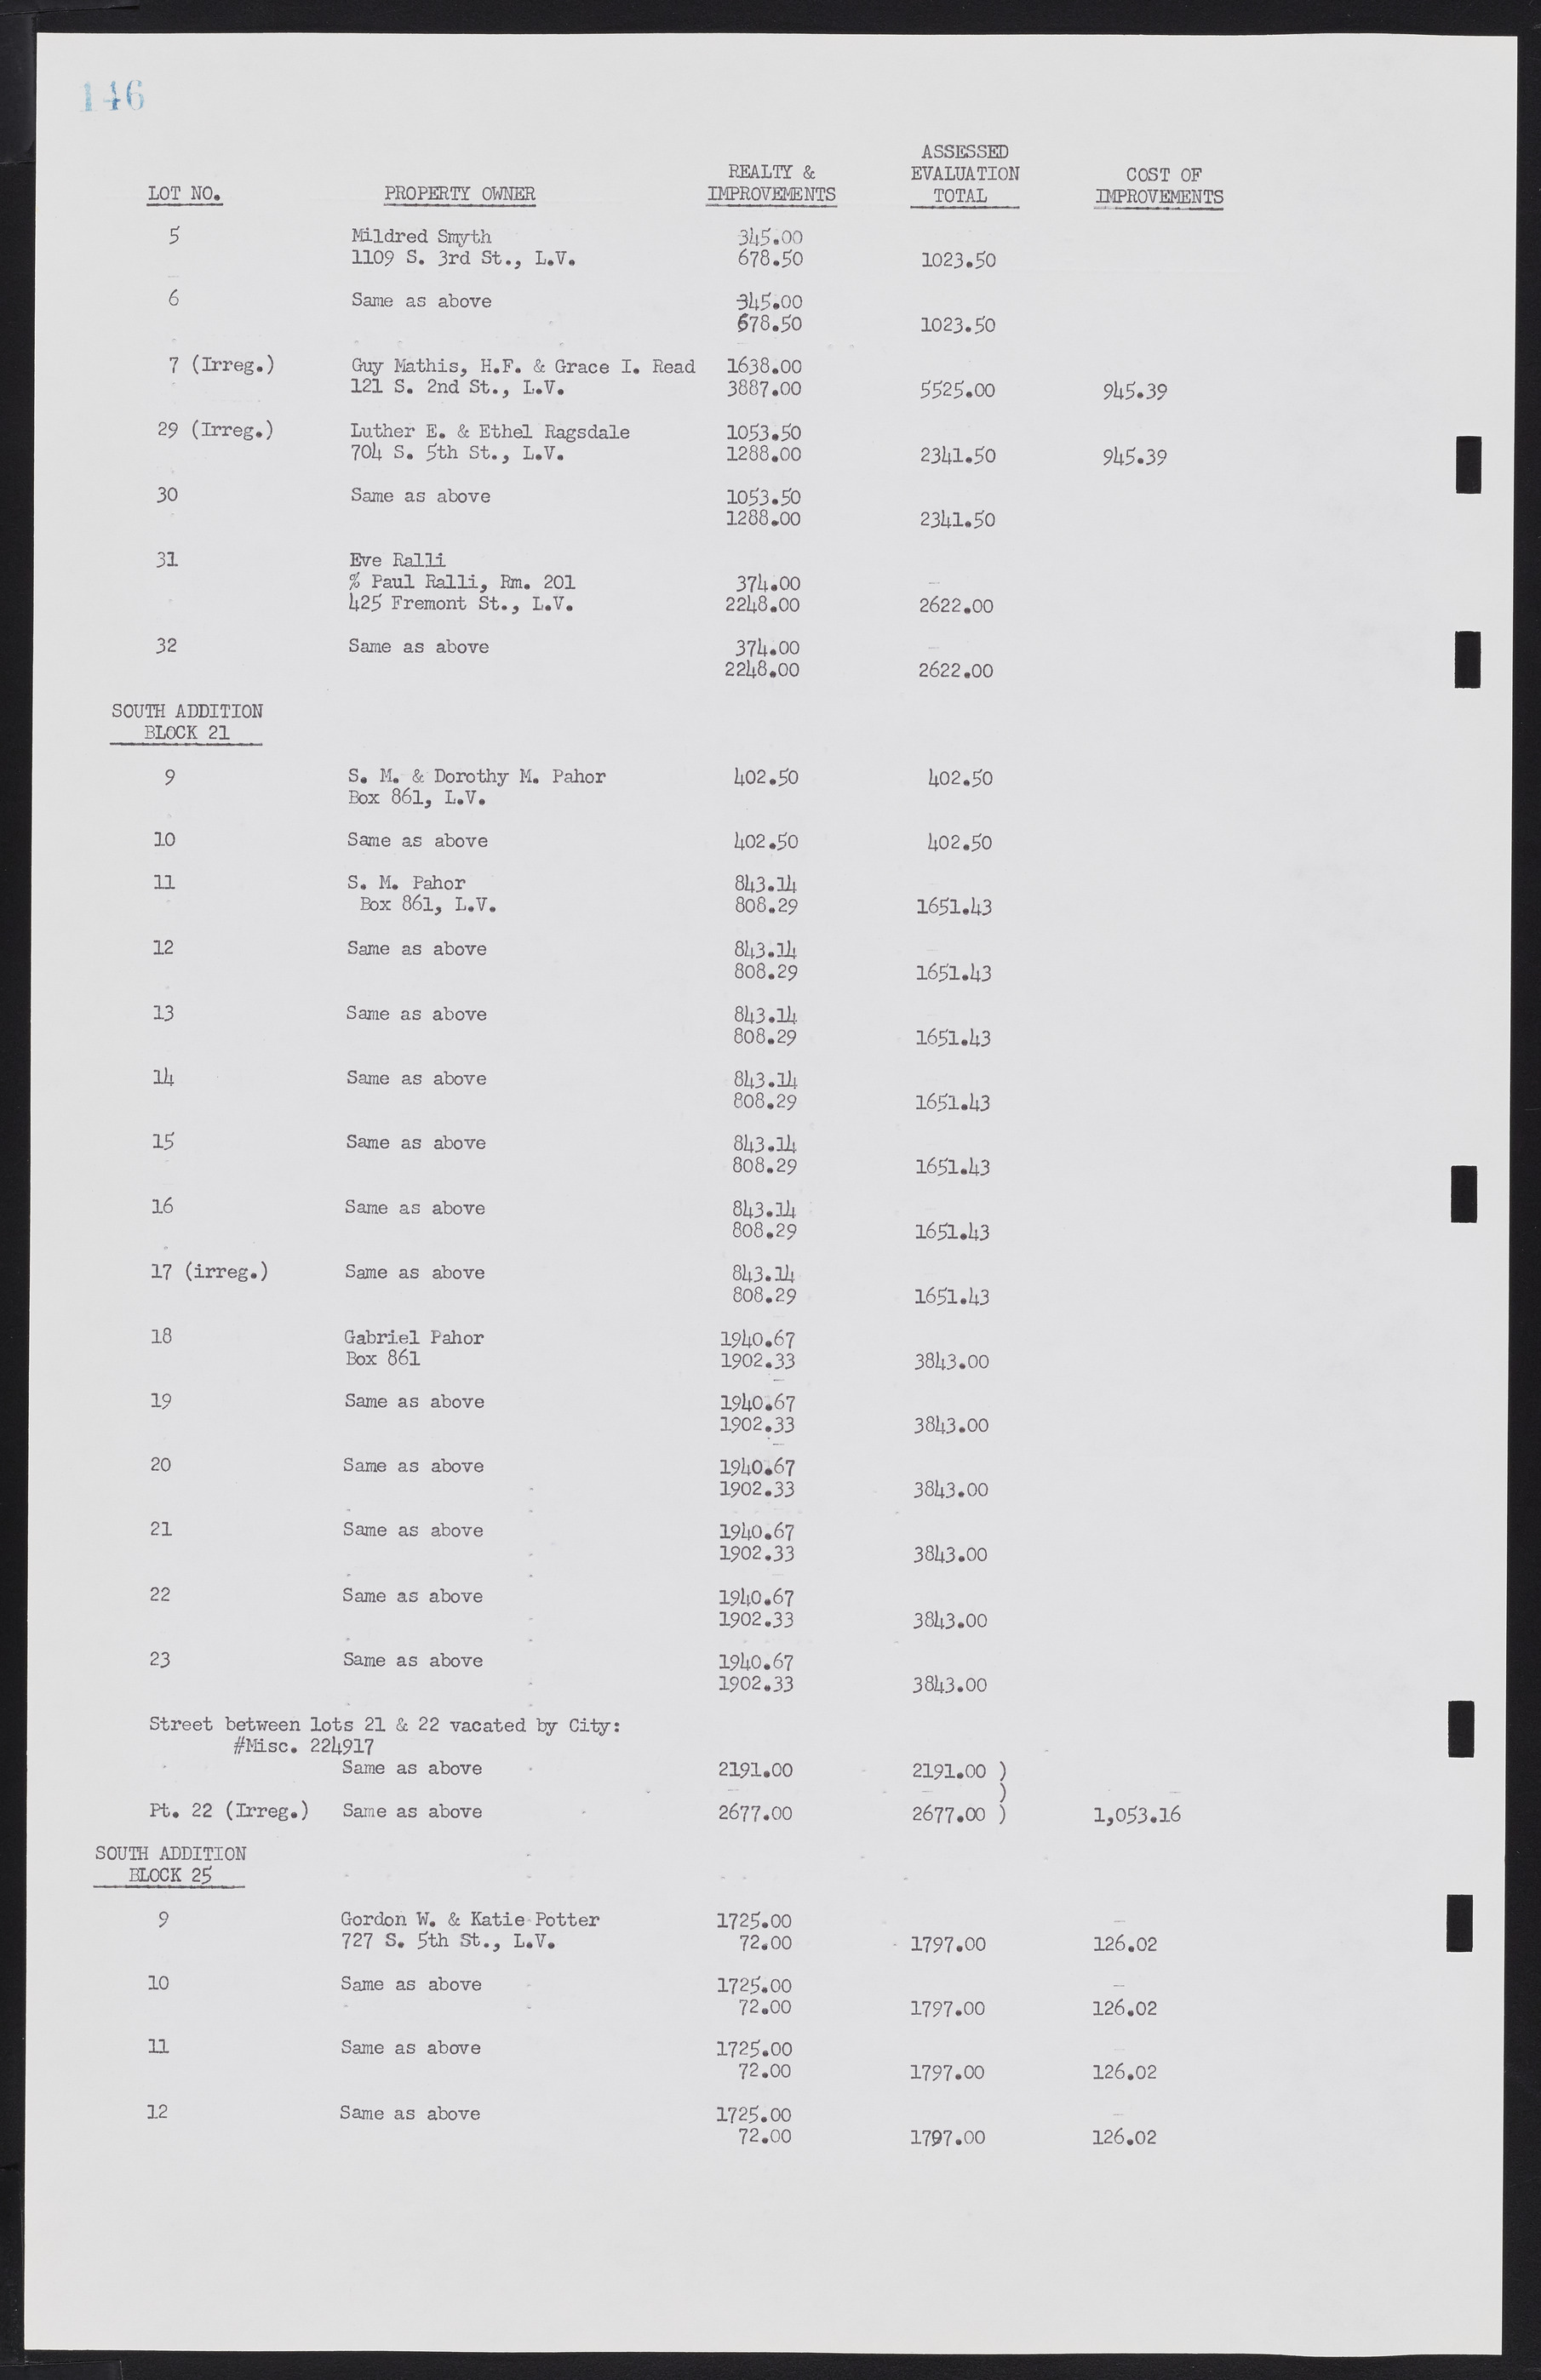 Las Vegas City Commission Minutes, February 17, 1954 to September 21, 1955, lvc000009-150